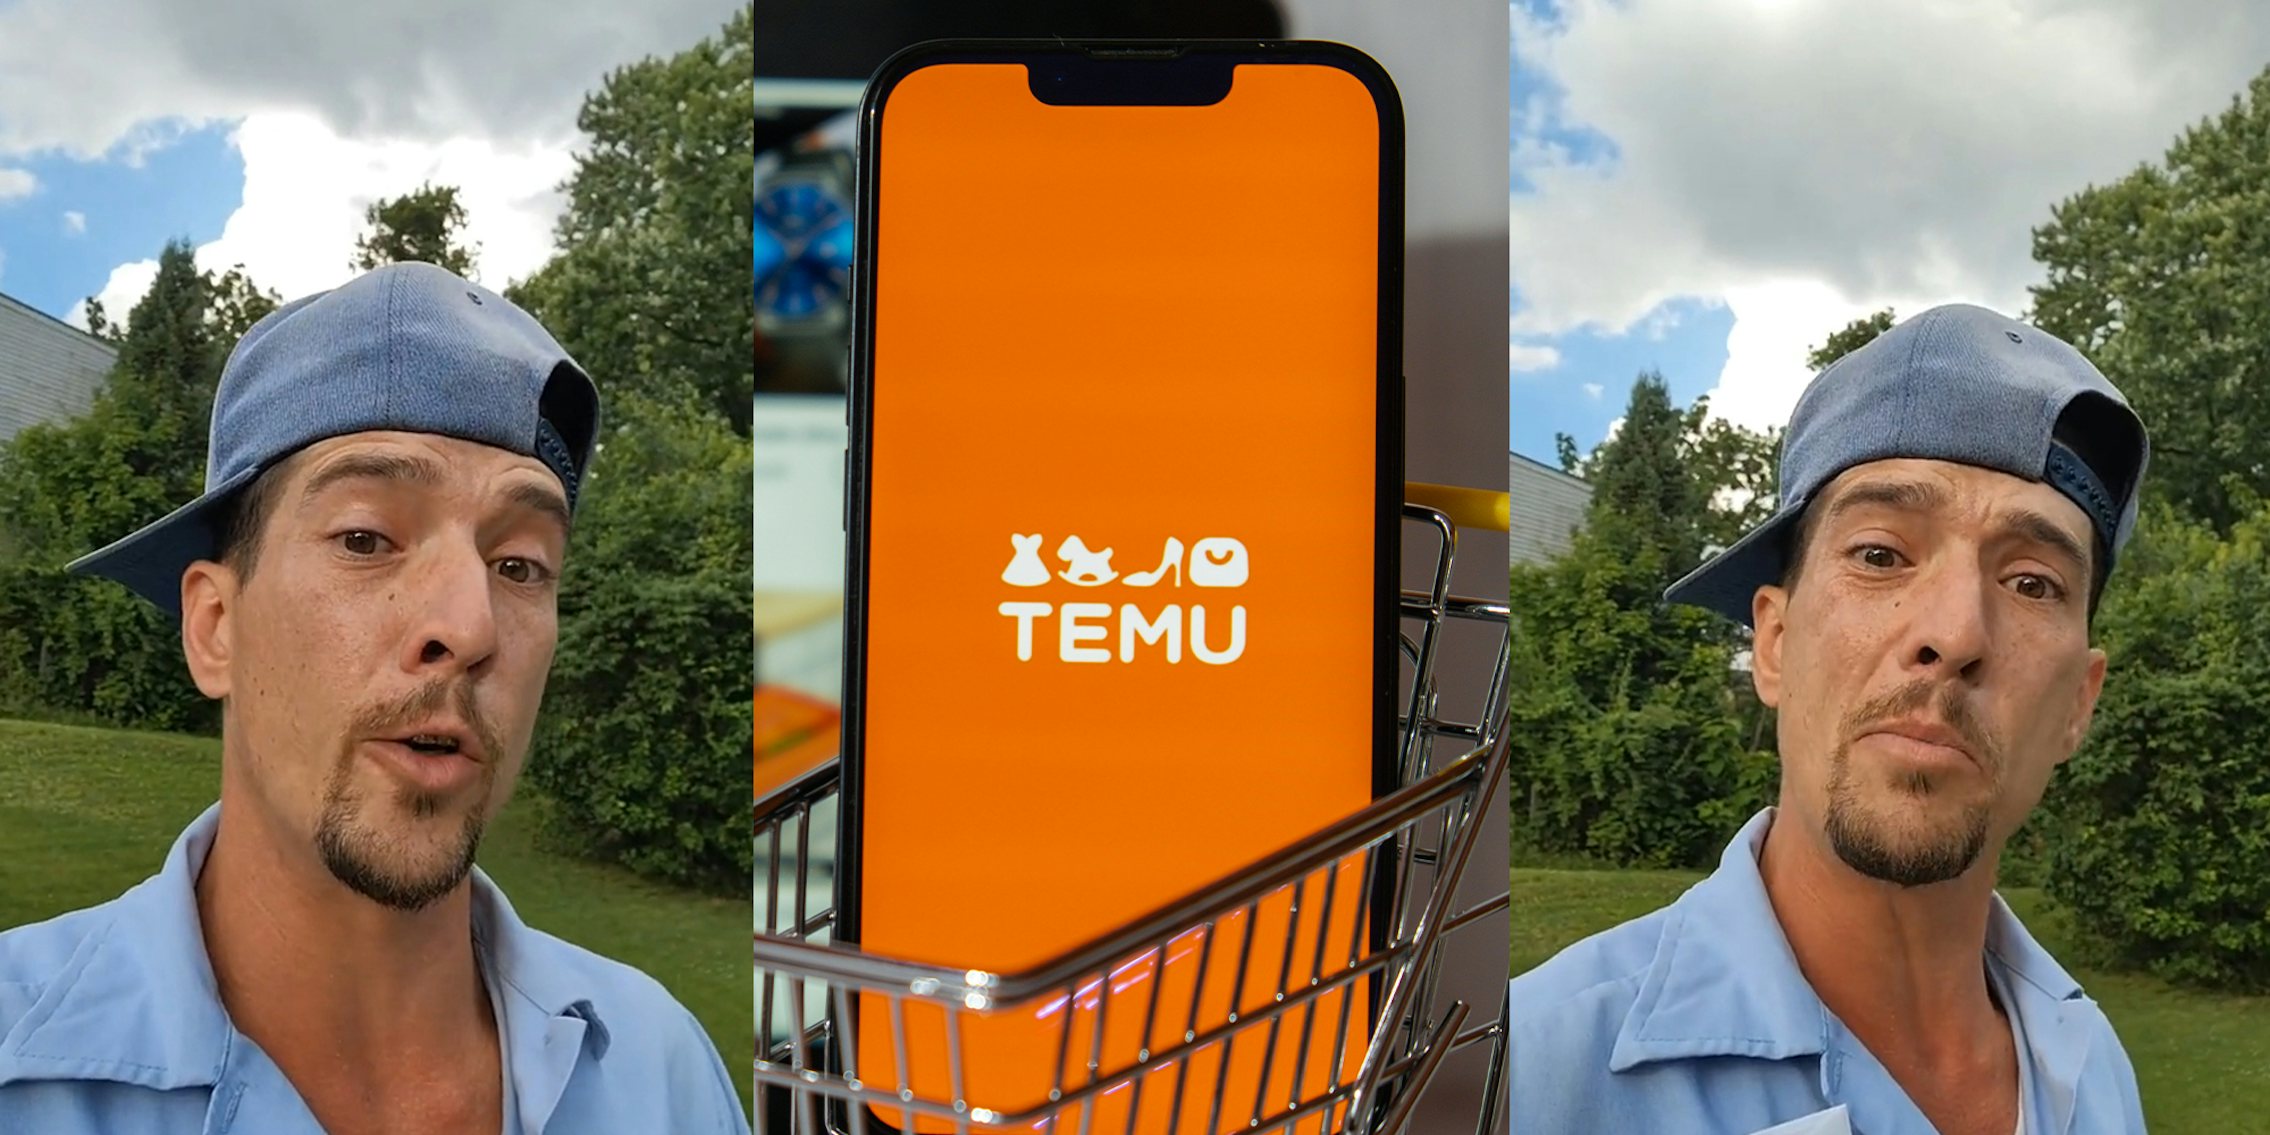 USPS Worker Begs Customers to Stop Ordering From Temu App